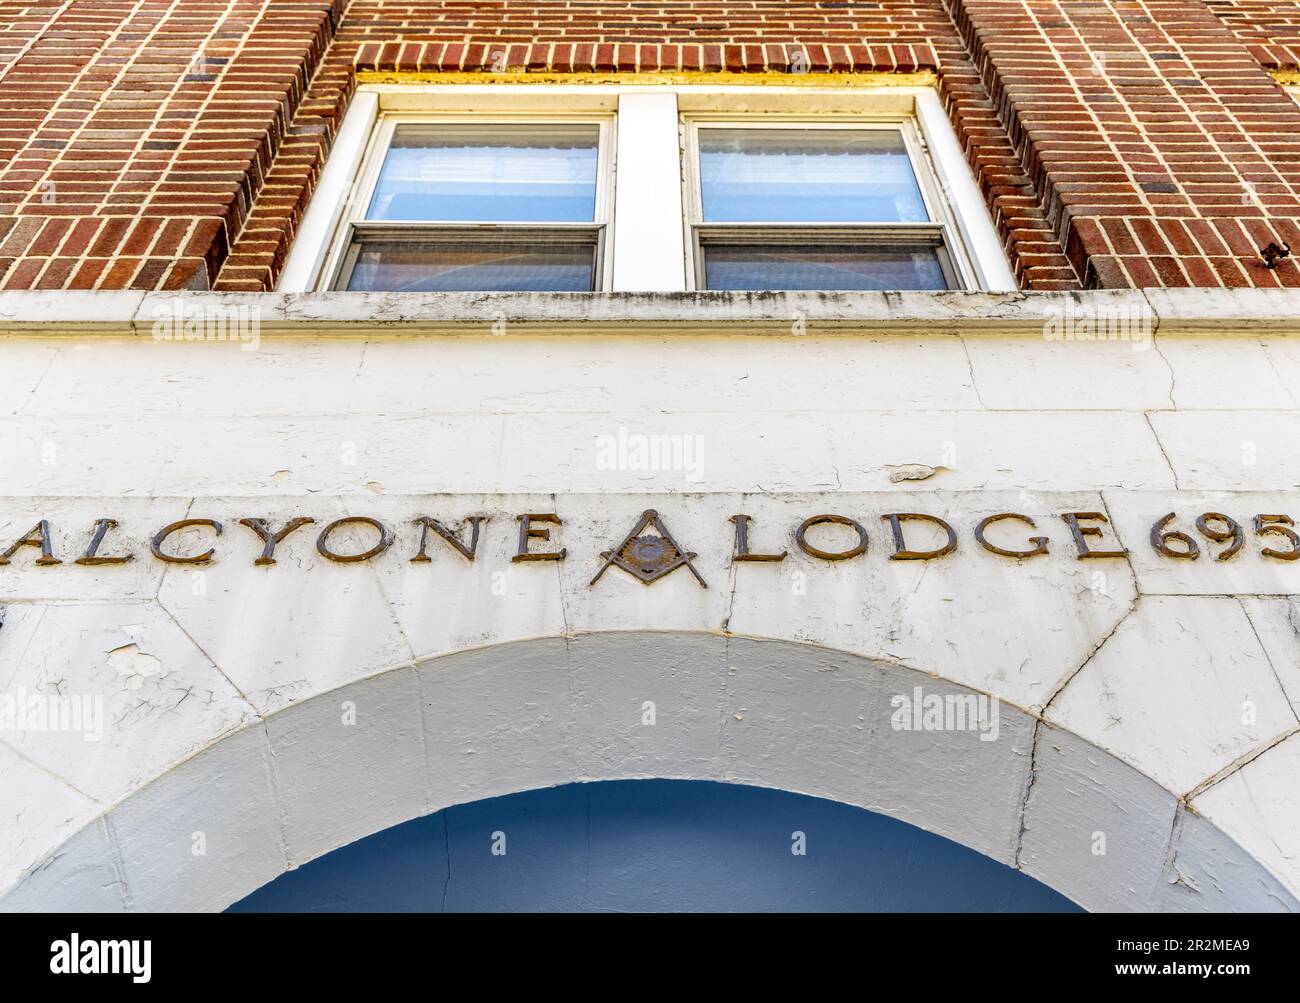 Alcyone Lodge 695 a Northport, Long Island, NY Foto Stock